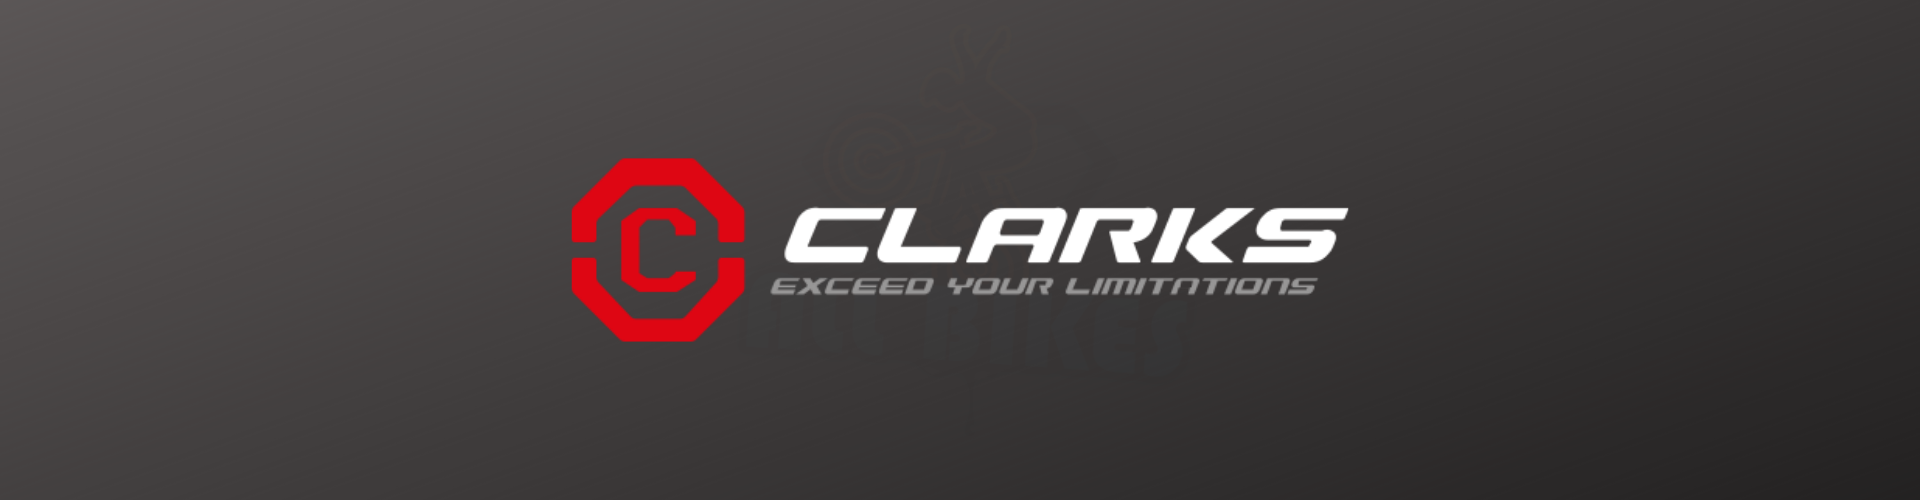 clarks Brand Category